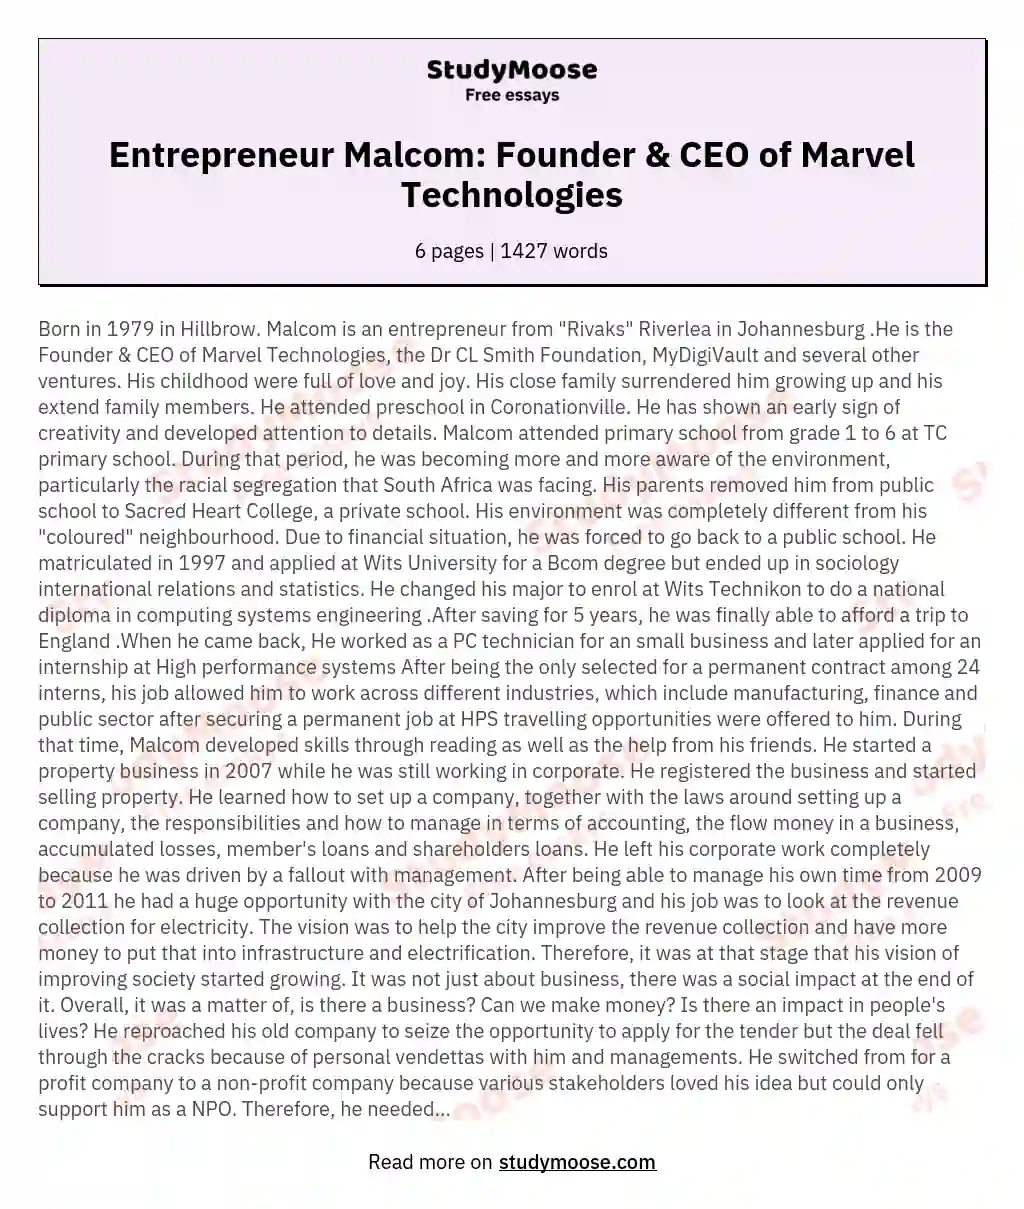 Entrepreneur Malcom: Founder & CEO of Marvel Technologies essay